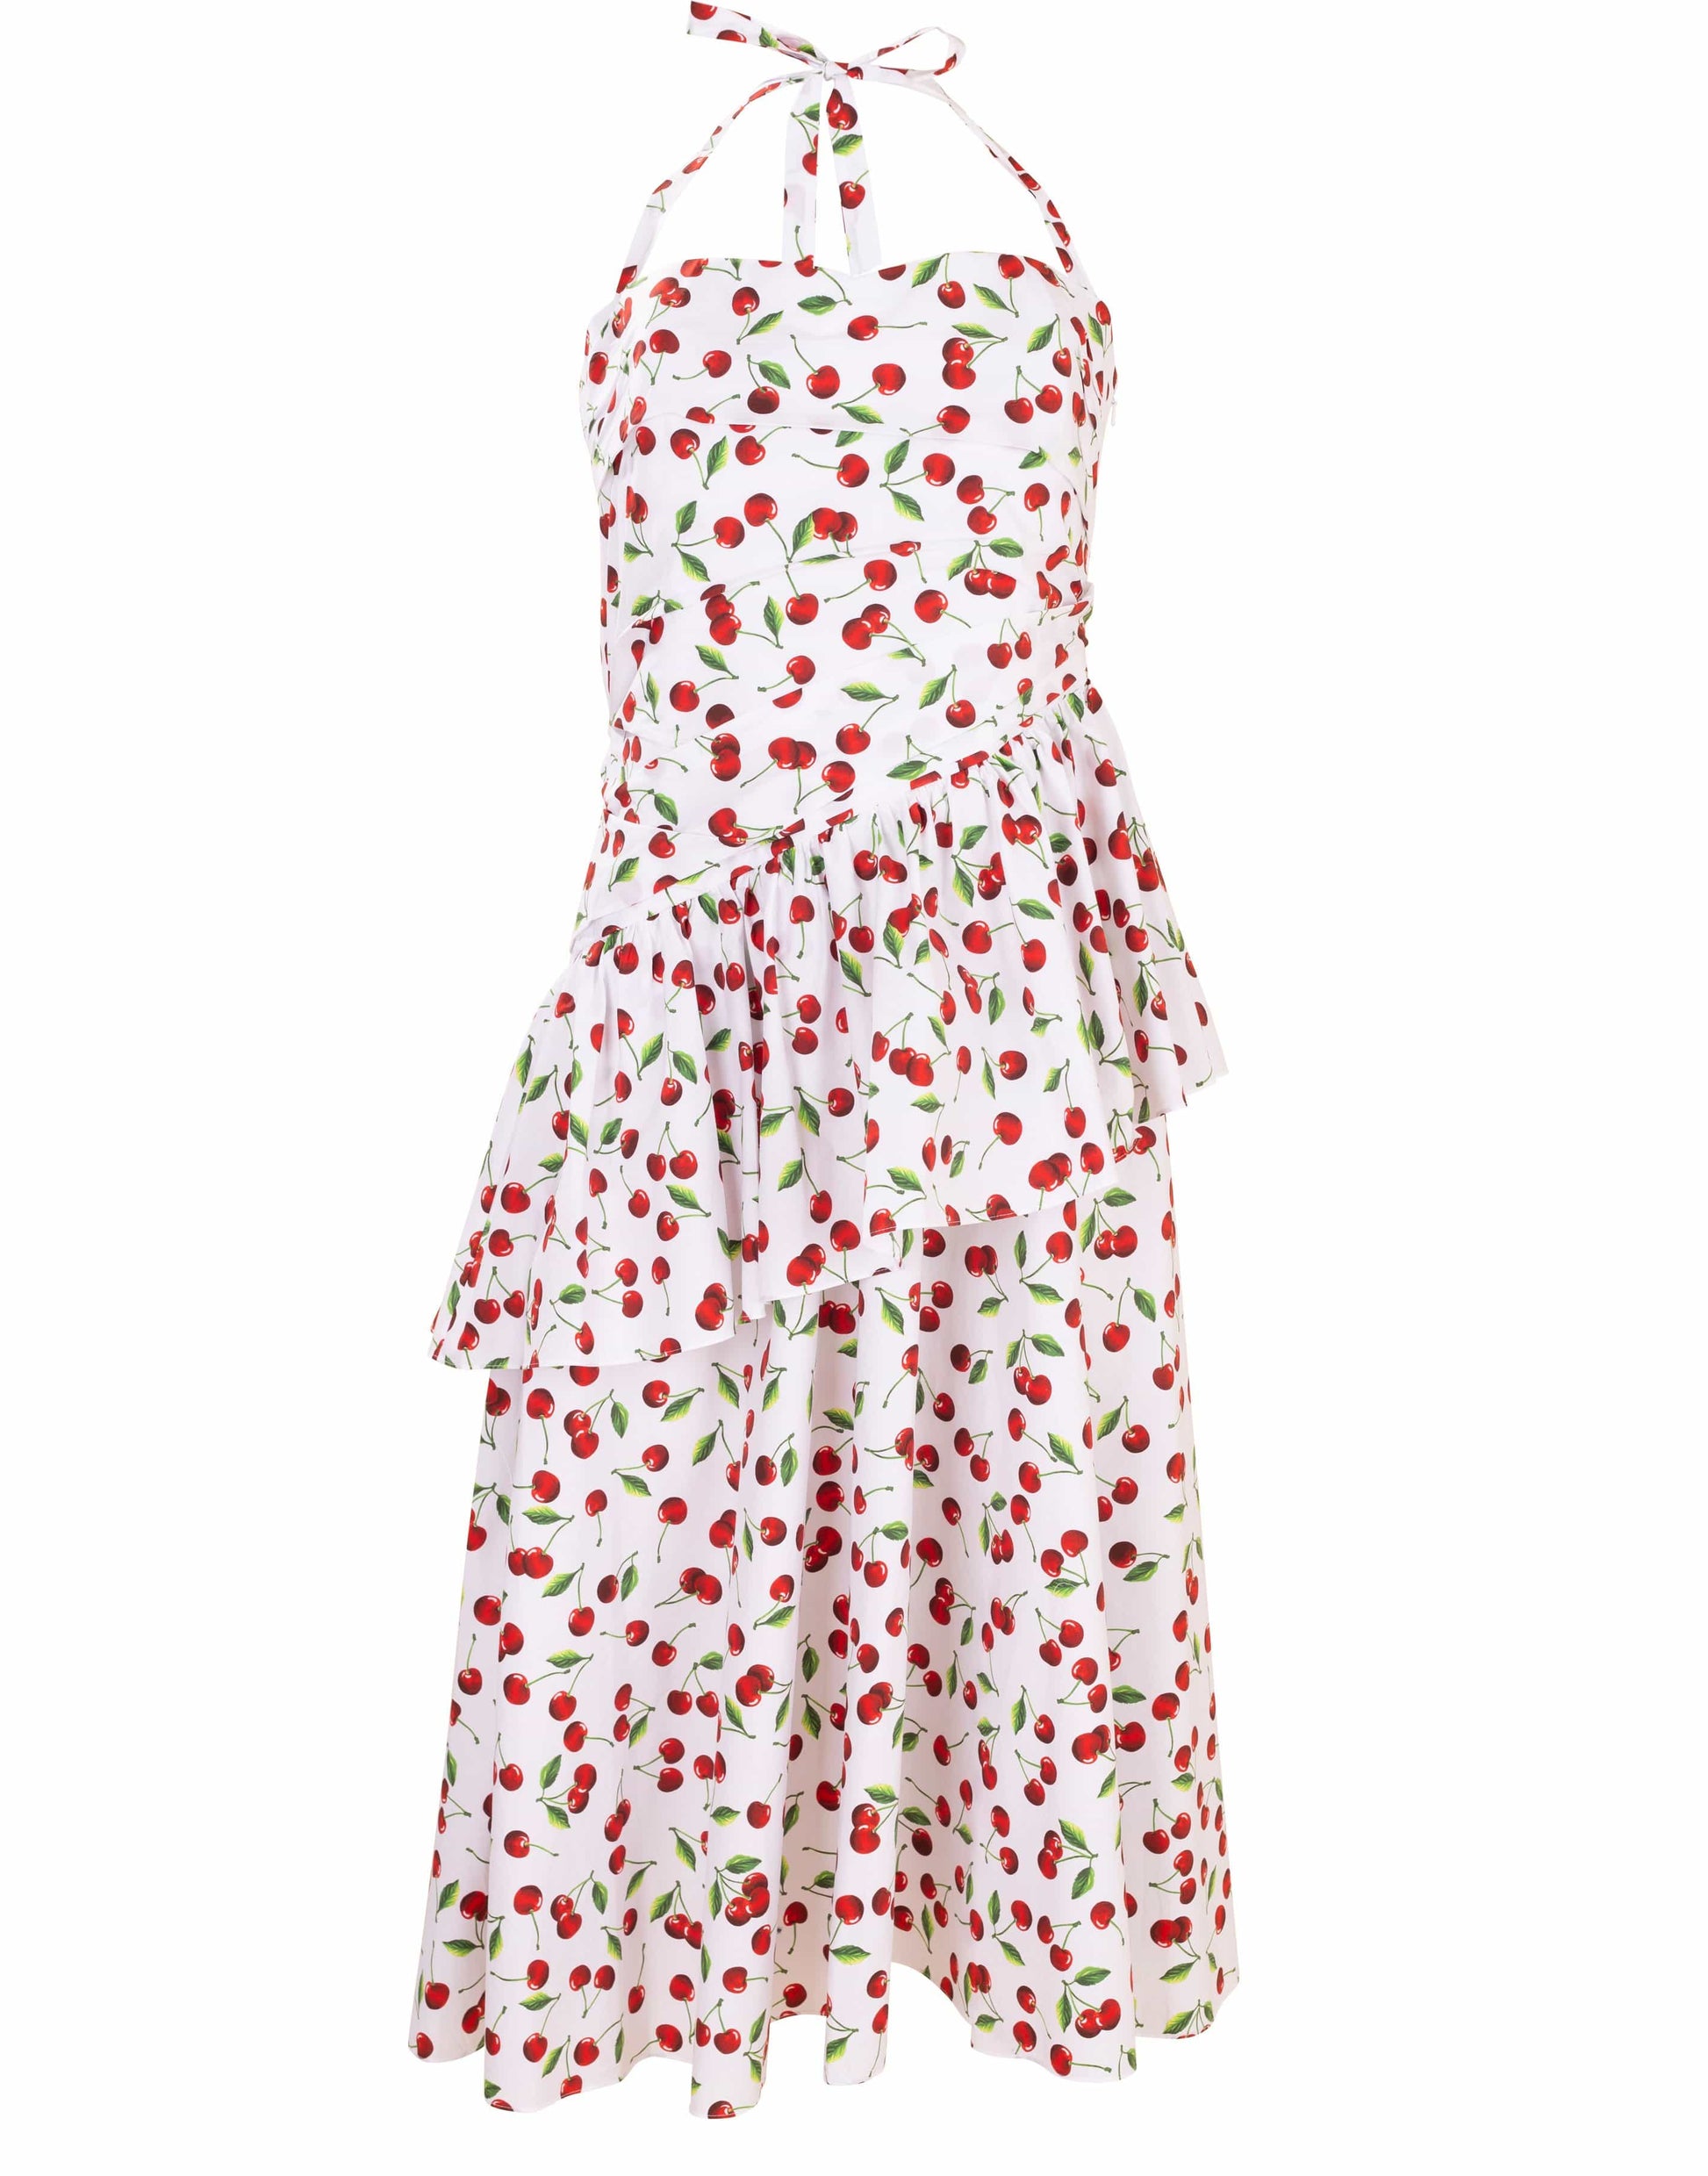 MICHAEL KORS-Cherry Print Ruched Peplum Halter Dress-